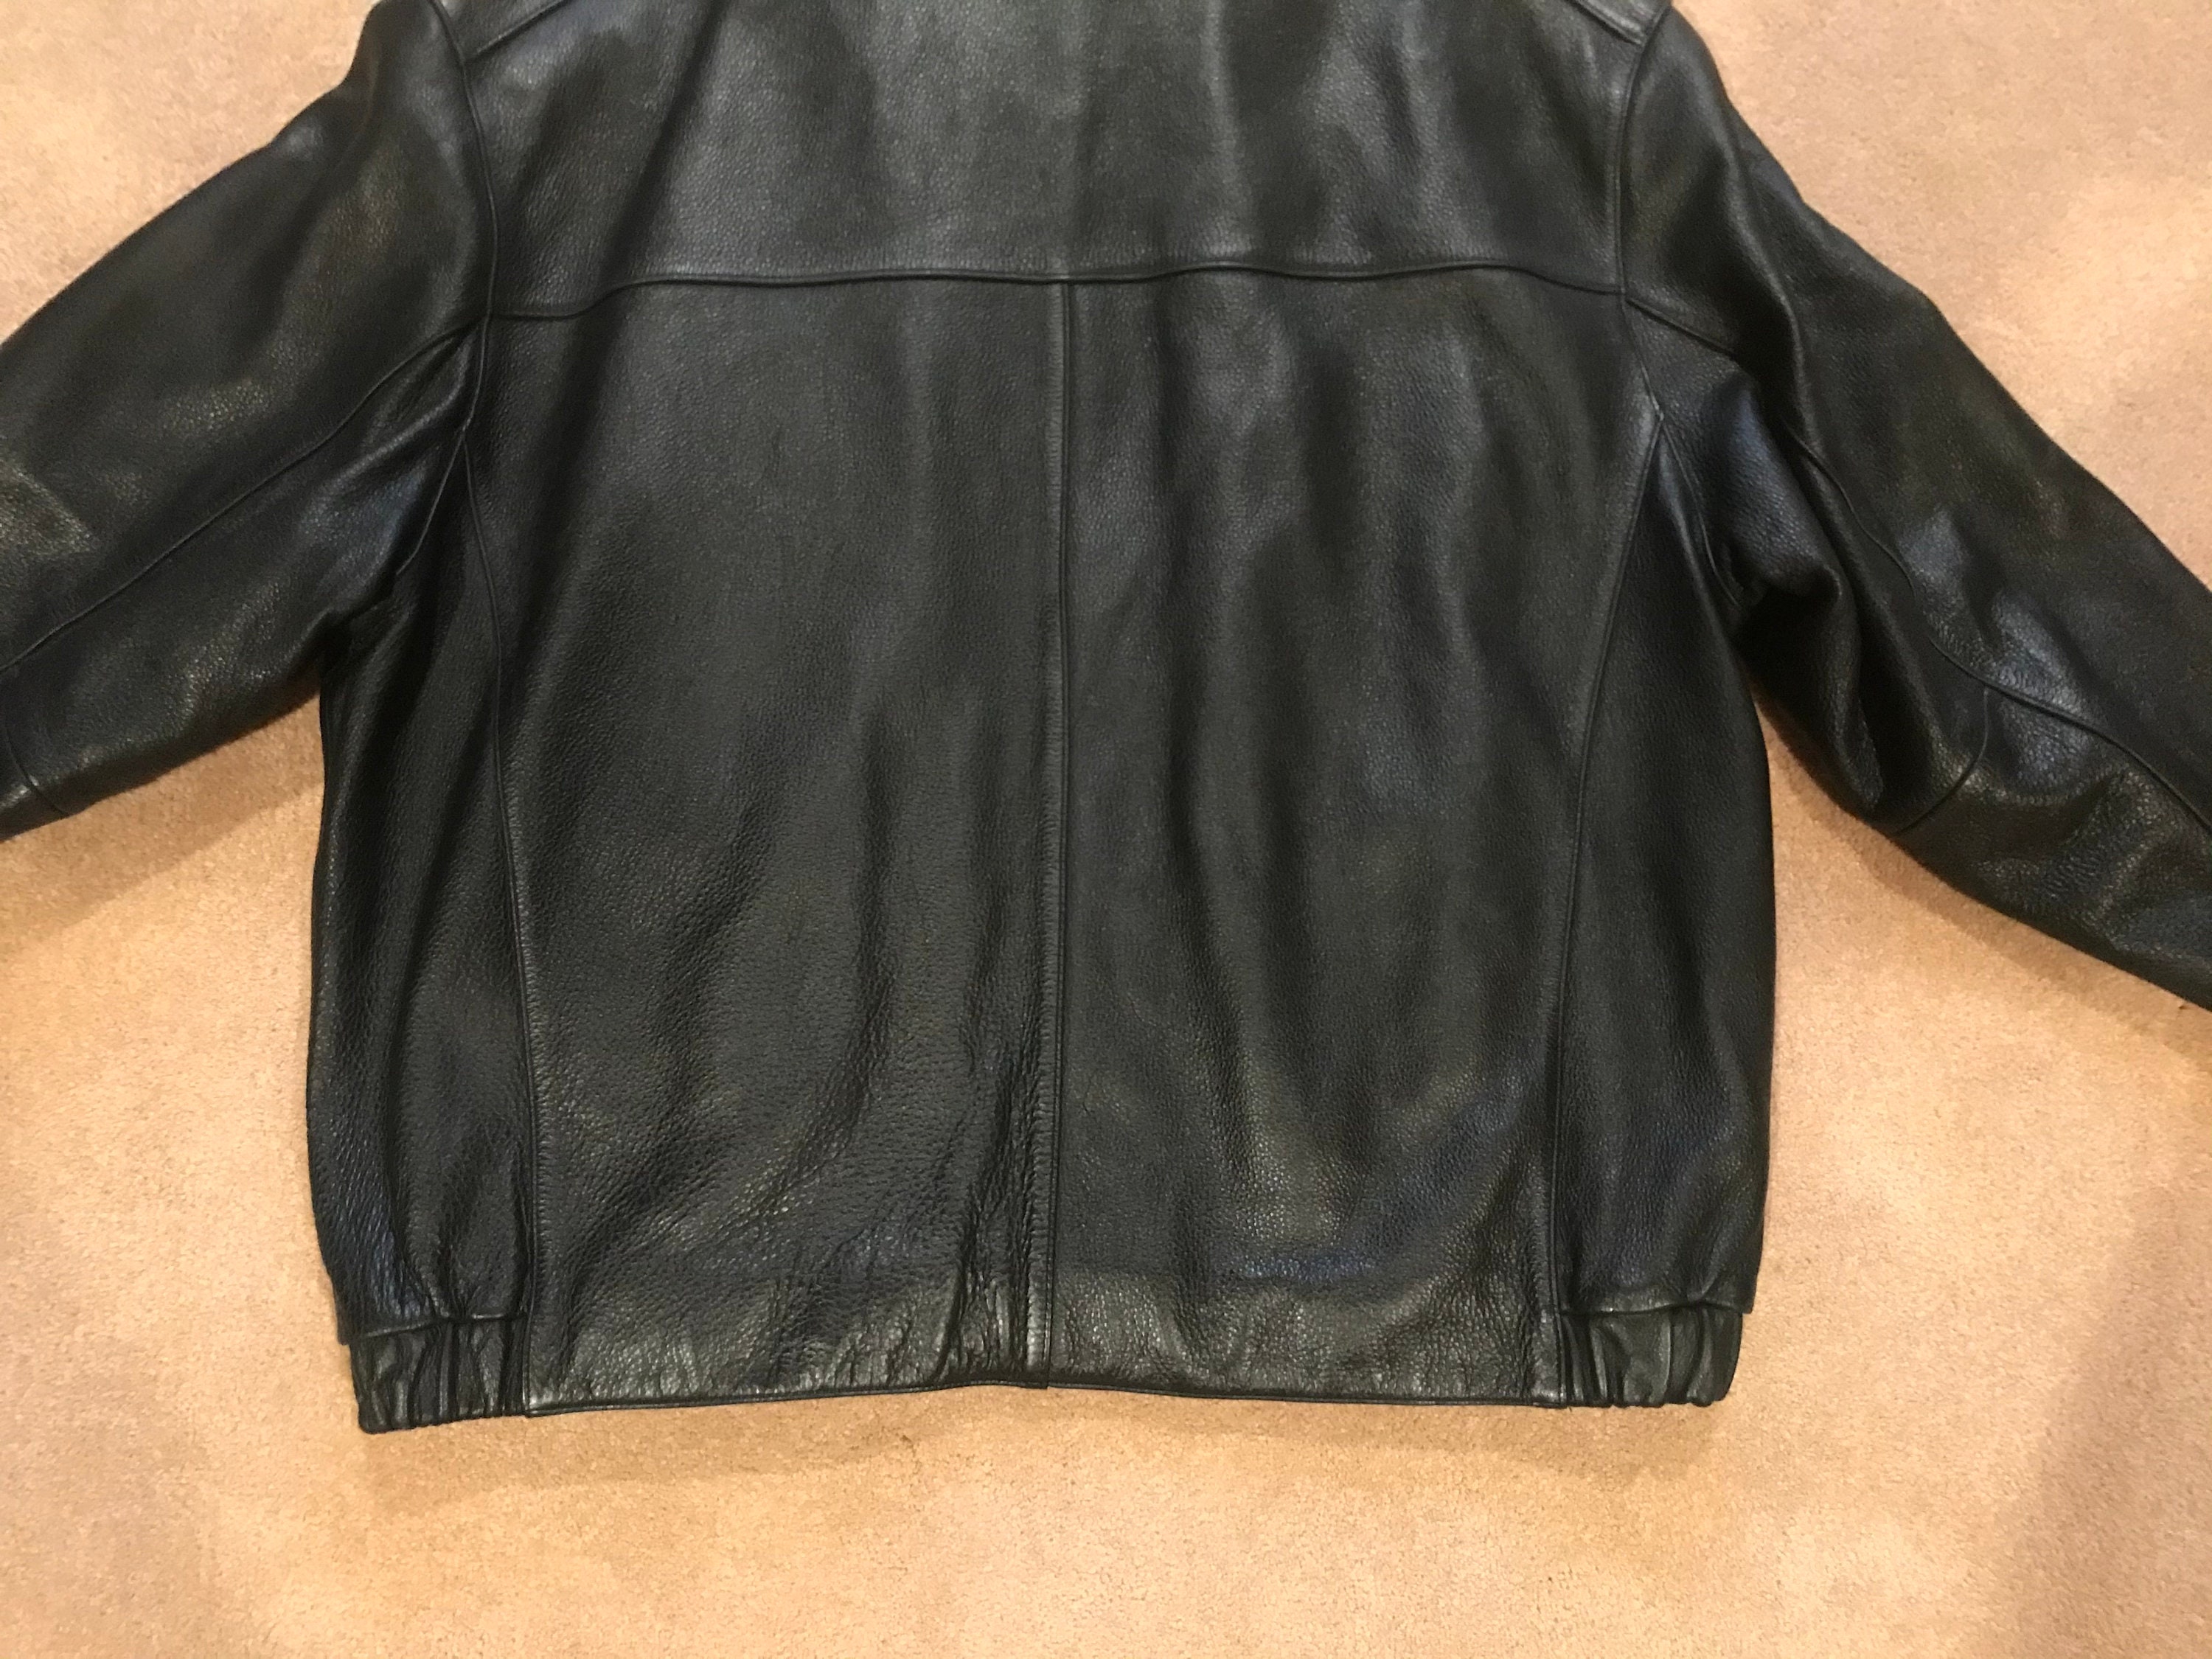 XL Men's Black Leather Jacket by RBM Motorcycle | Etsy